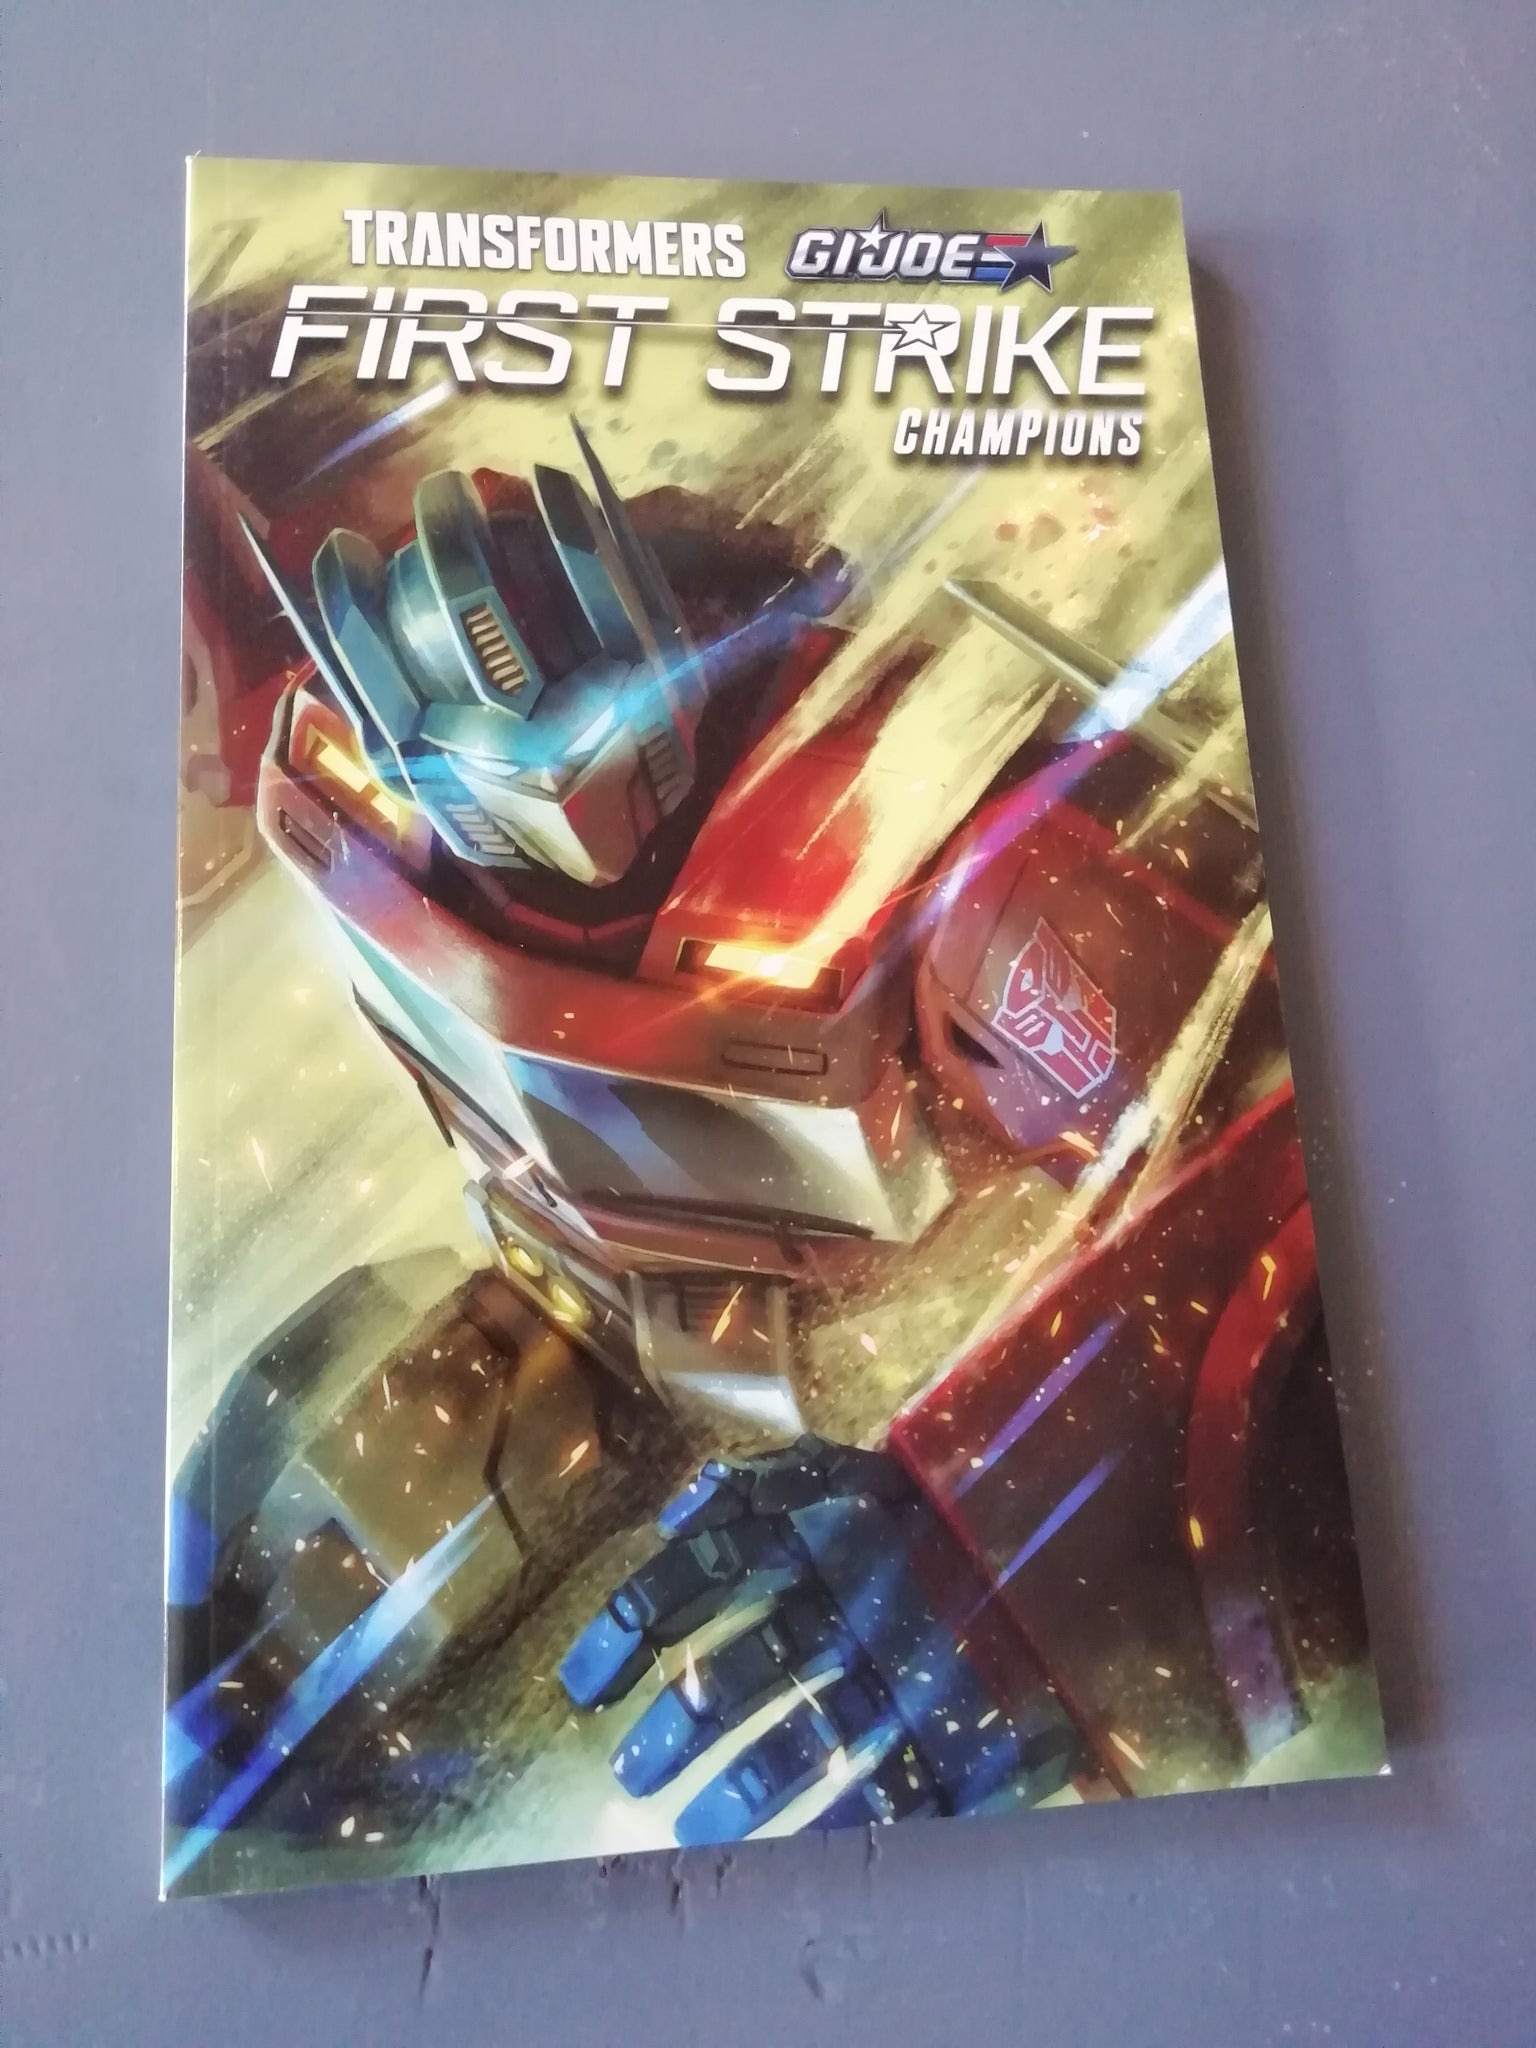 Transformers/GI Joe - First Strike Champions TPB NM